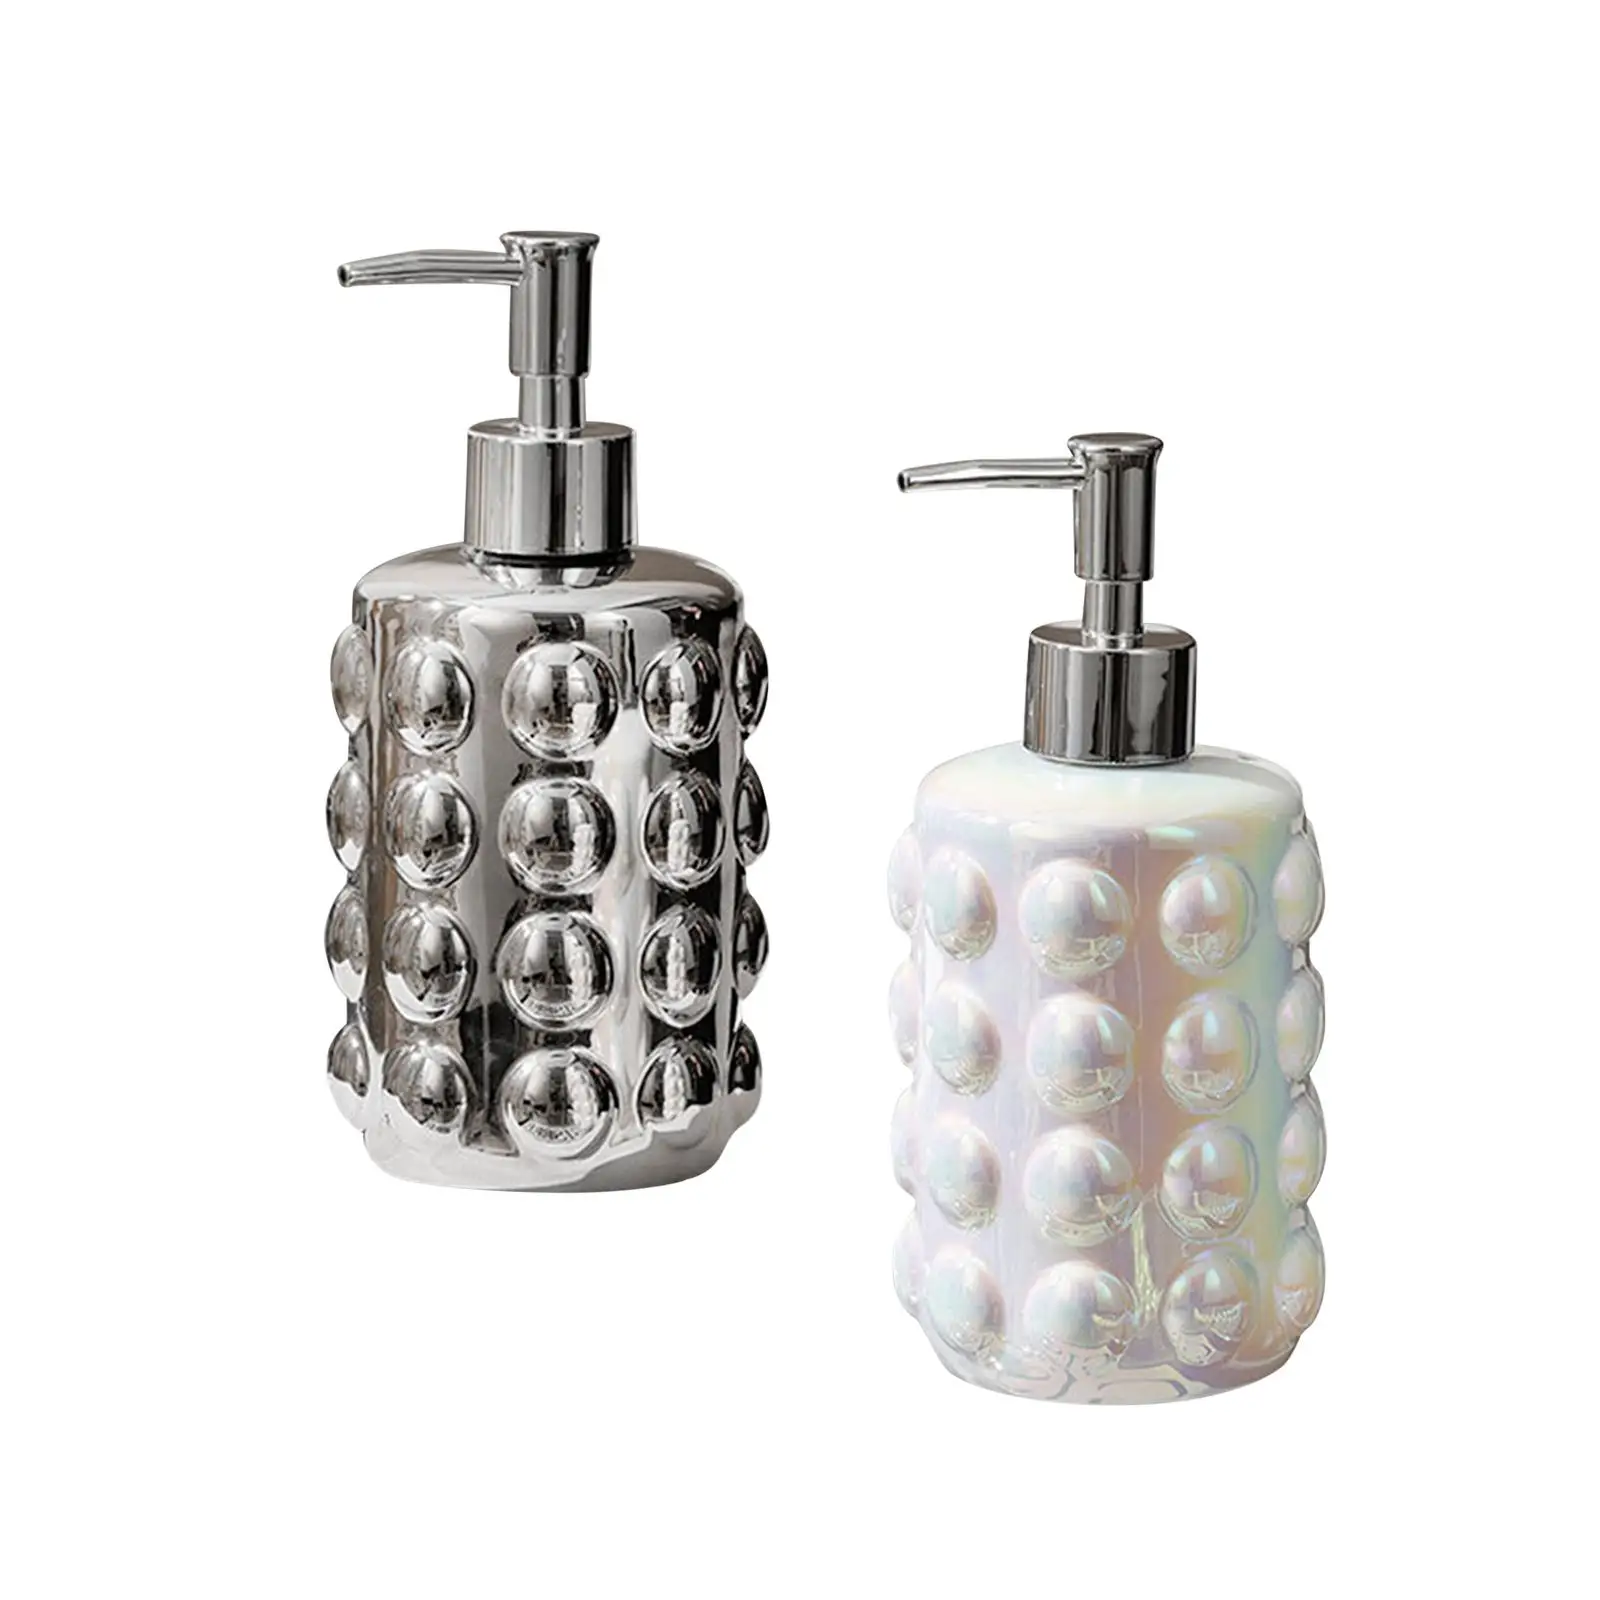 Liquid Soap Dispenser Ceramic Refillable Kitchen Sink Dish Soap Dispenser 350ml Recyclable Stylish Size 8cmx12cm with Push Pump